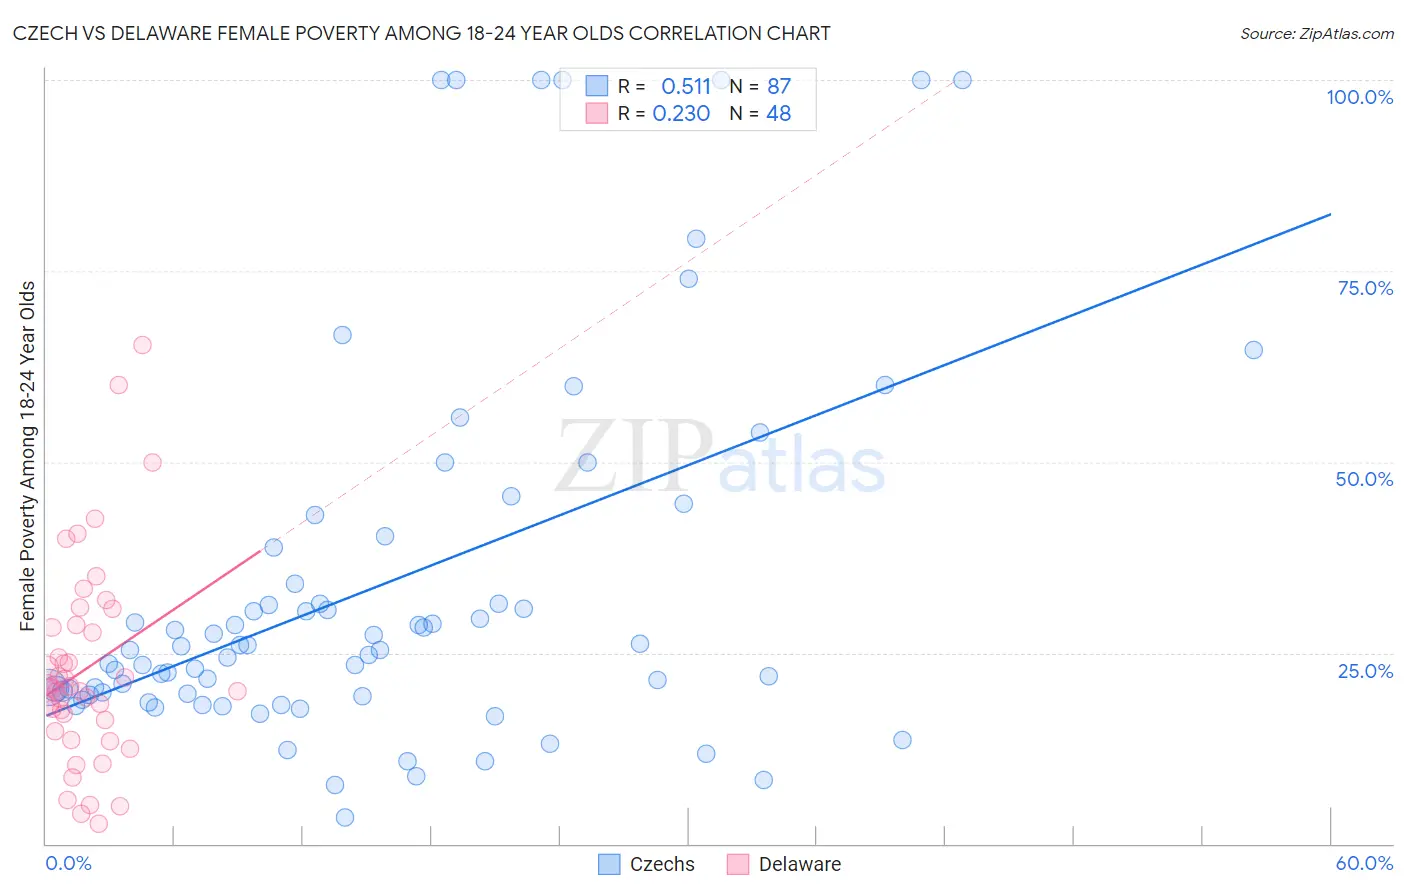 Czech vs Delaware Female Poverty Among 18-24 Year Olds